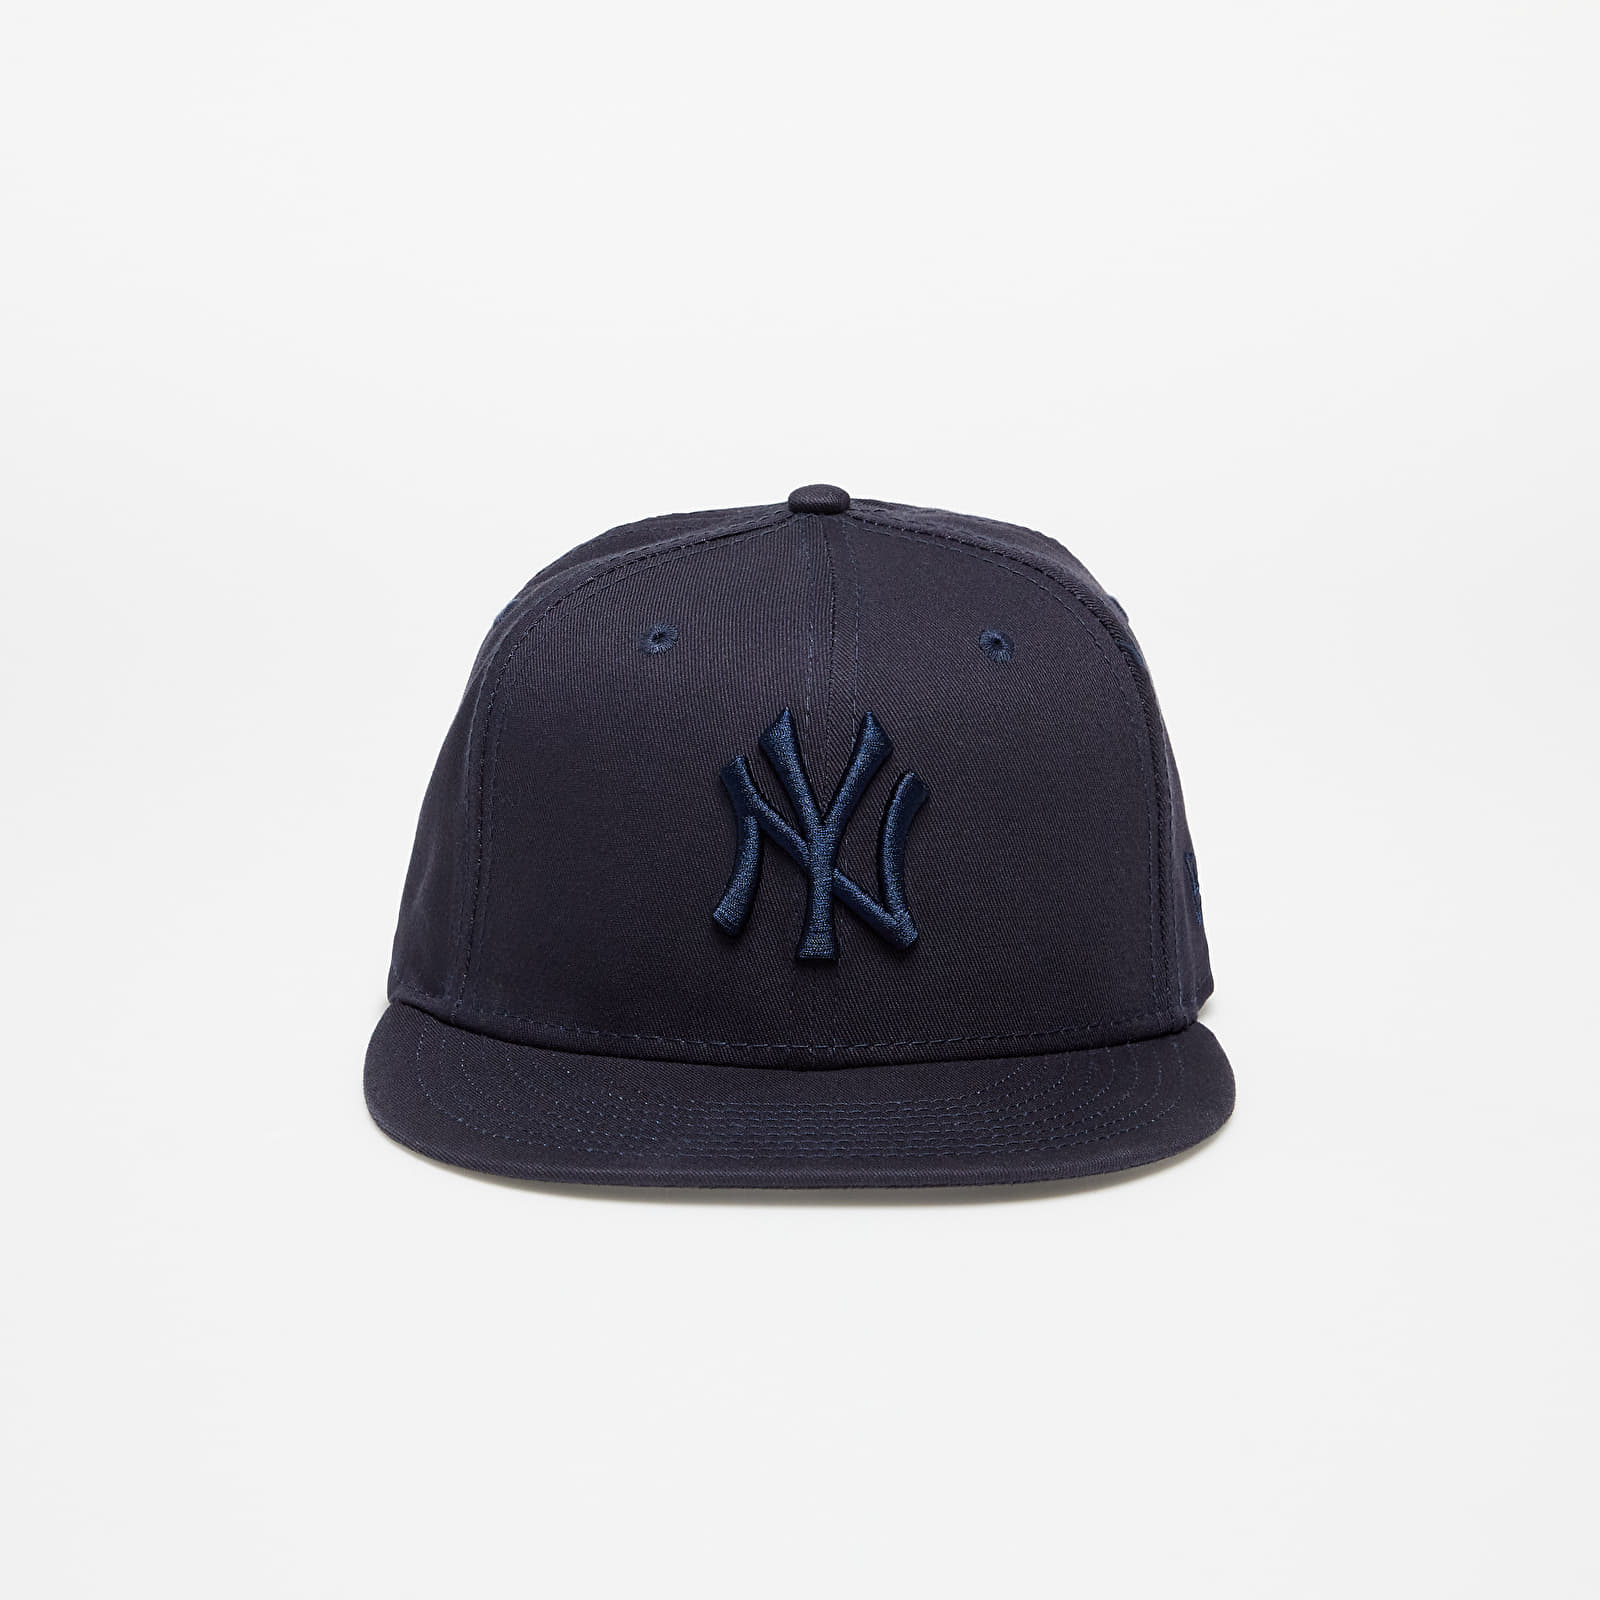 Caps New Era New York Yankees League Essential 9FIFTY Snapback Cap Navy